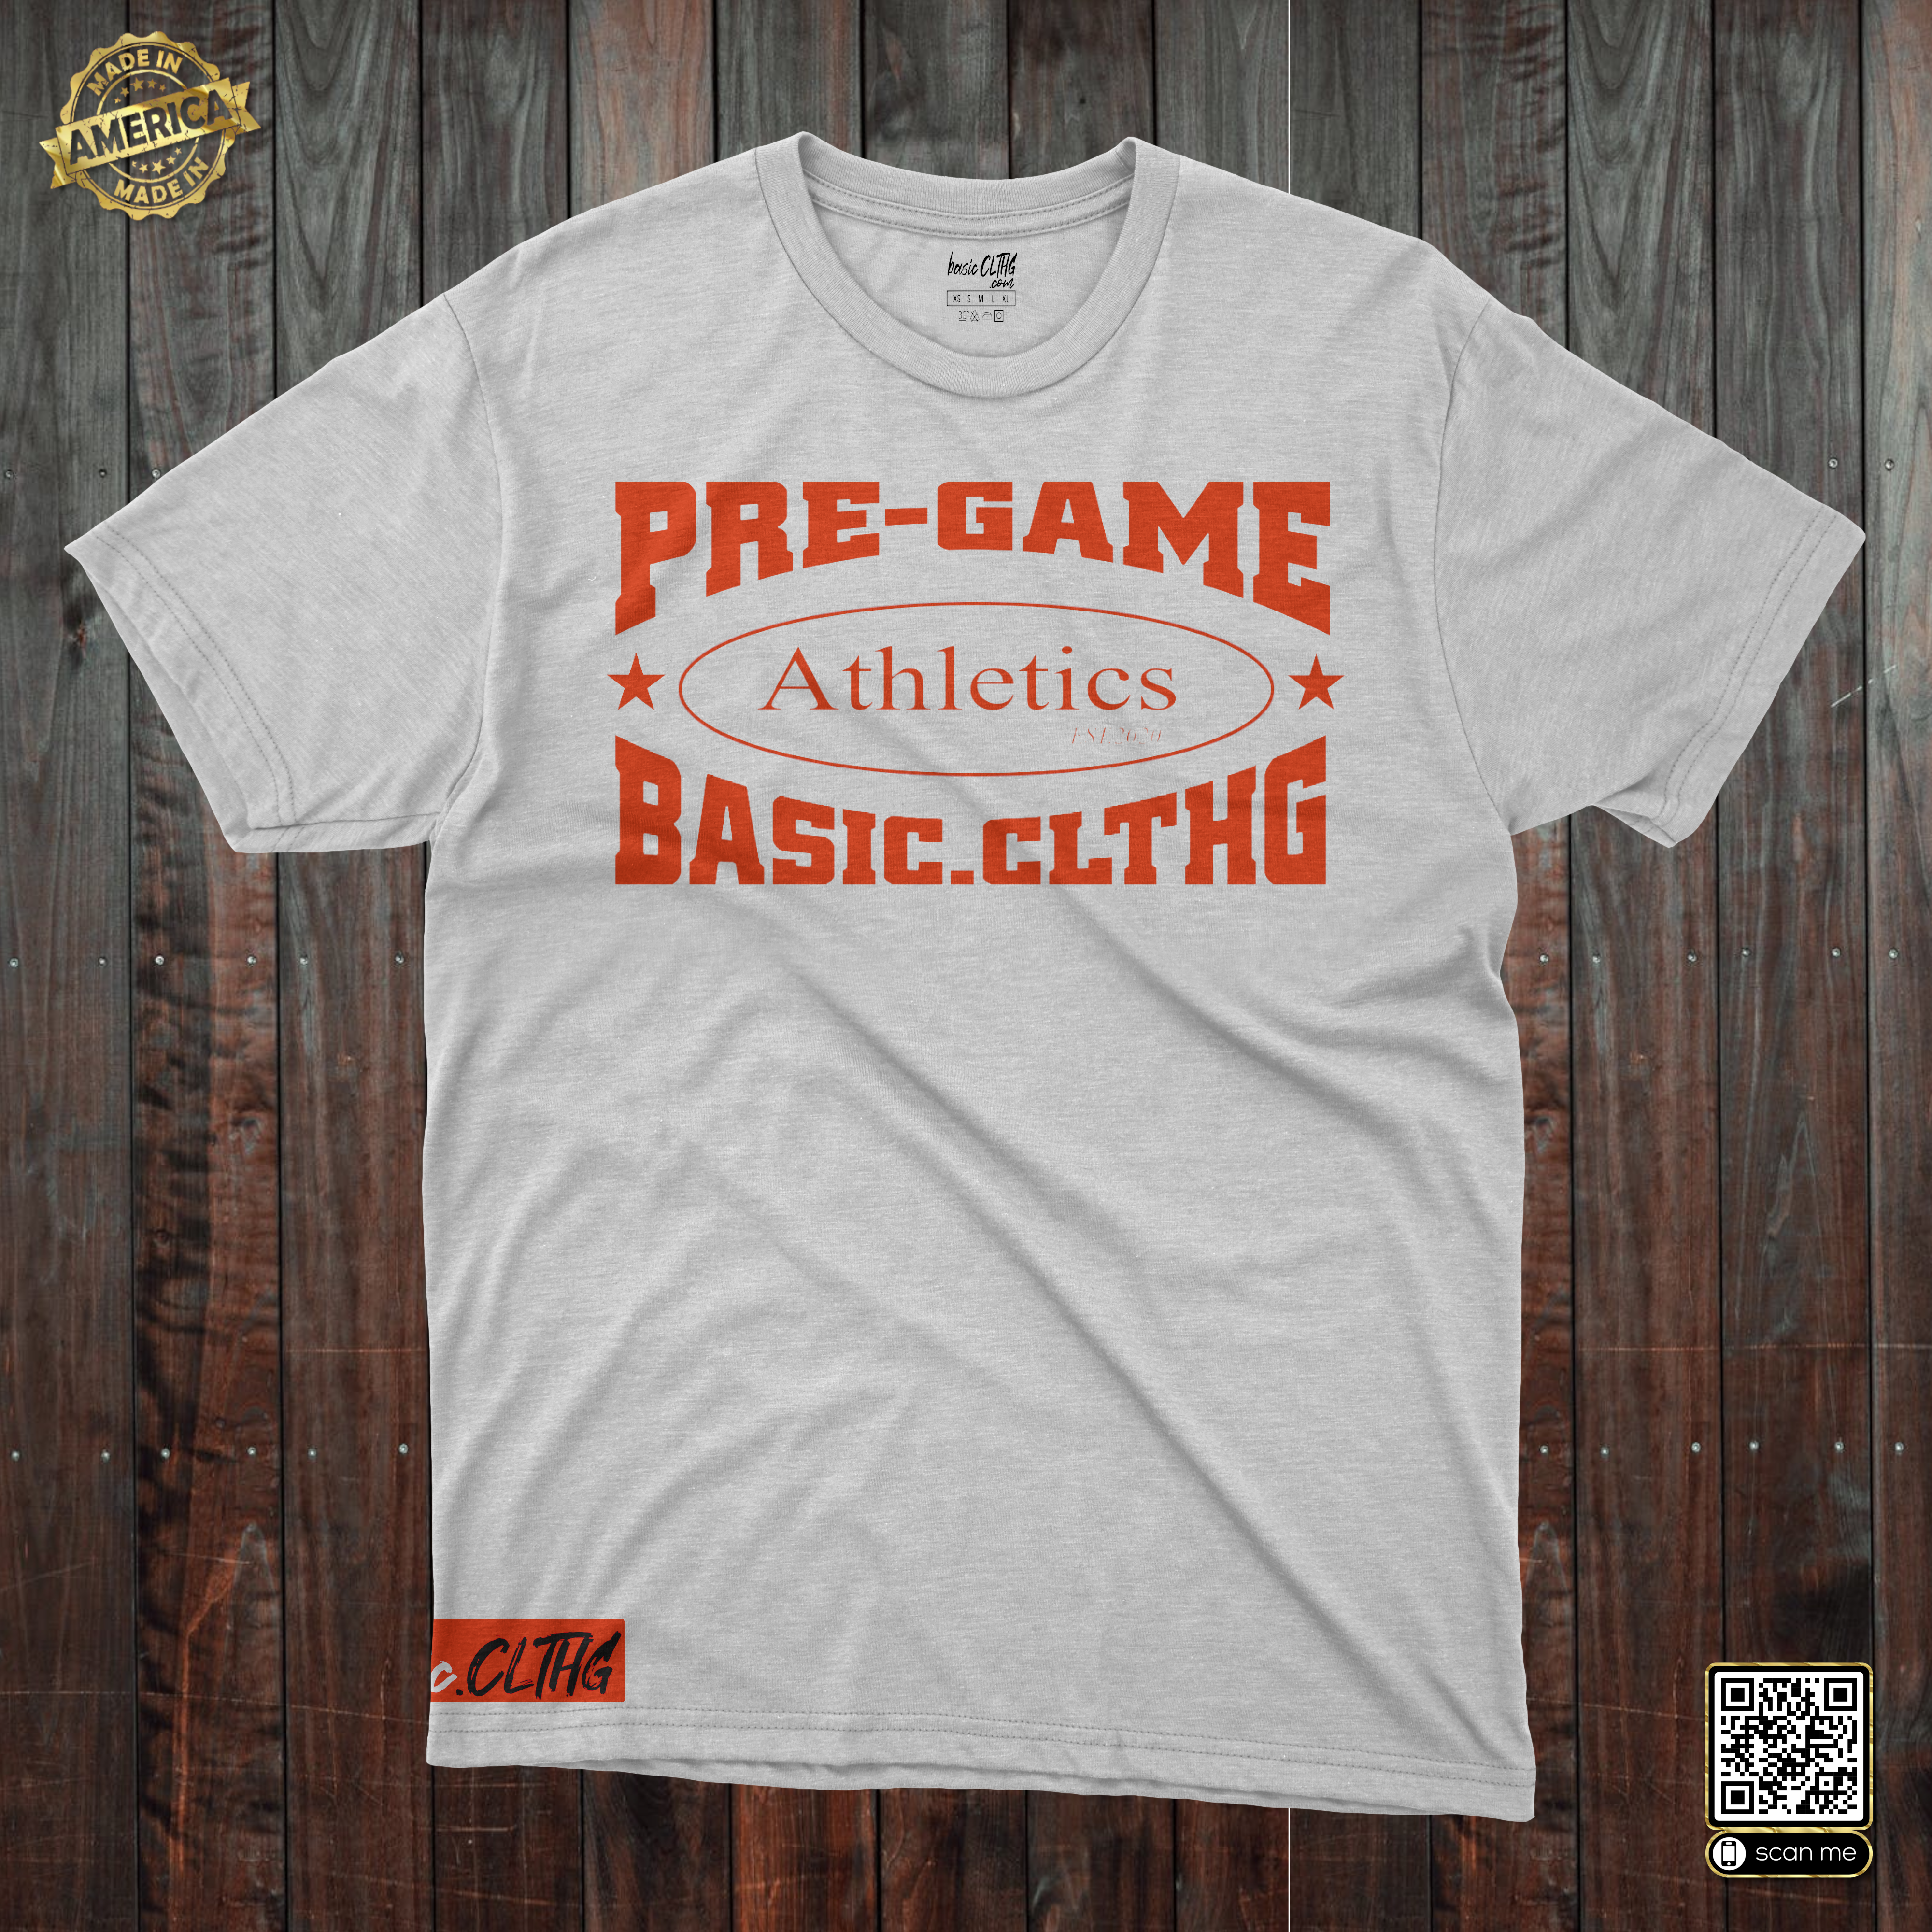 basic.CLTHG - PRE-GAME Athletics